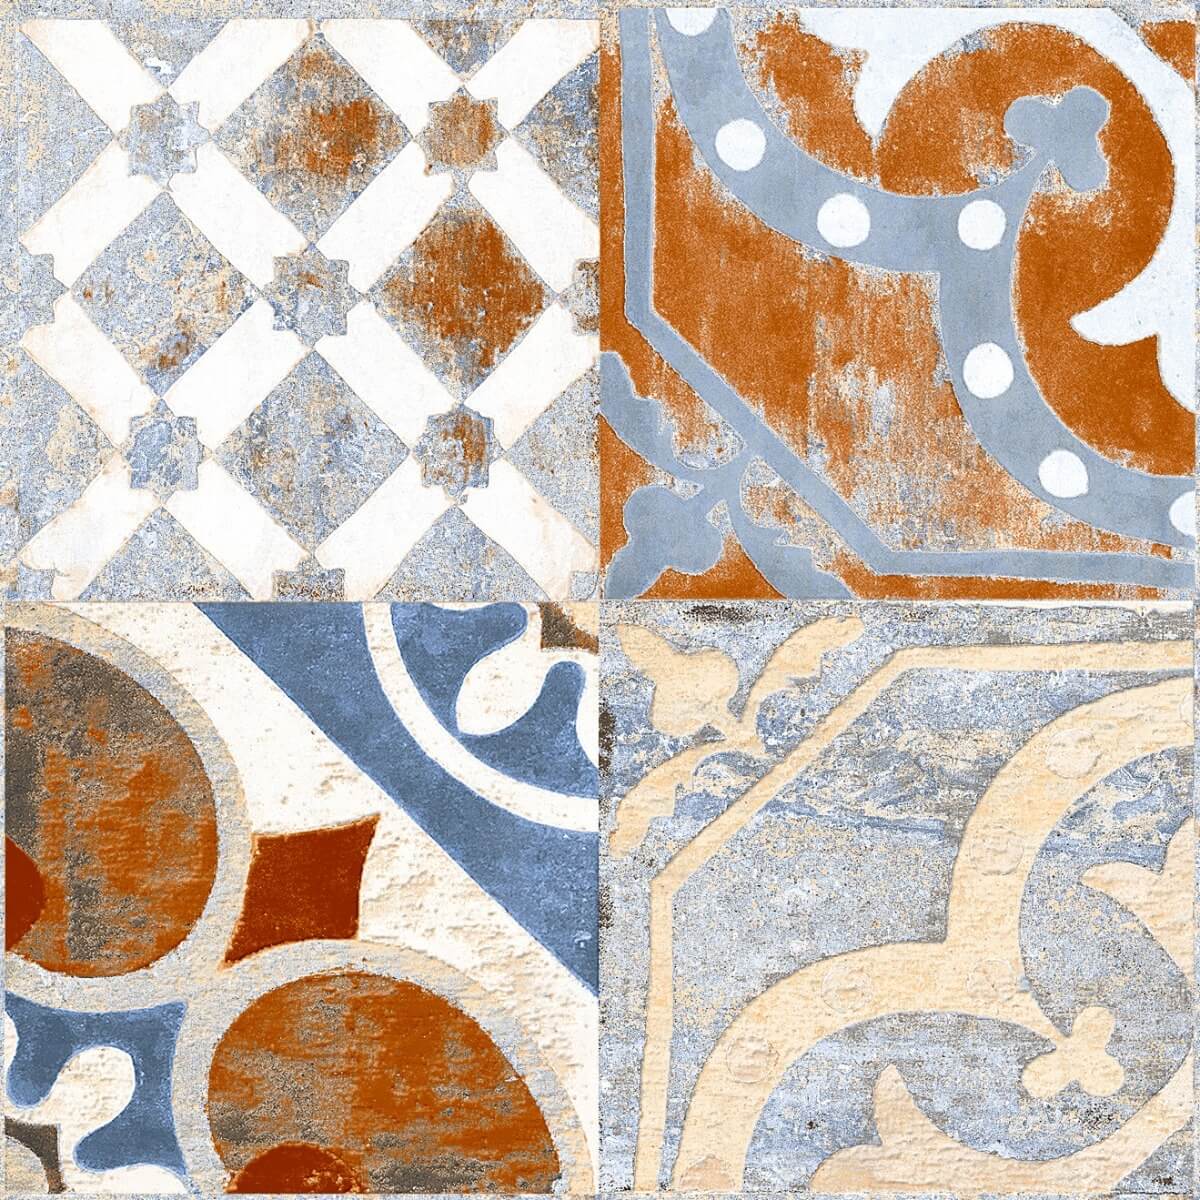 Stylized Tiles for Accent Tiles, Dining Room Tiles, Hospital Tiles, Bar/Restaurant, Outdoor Area